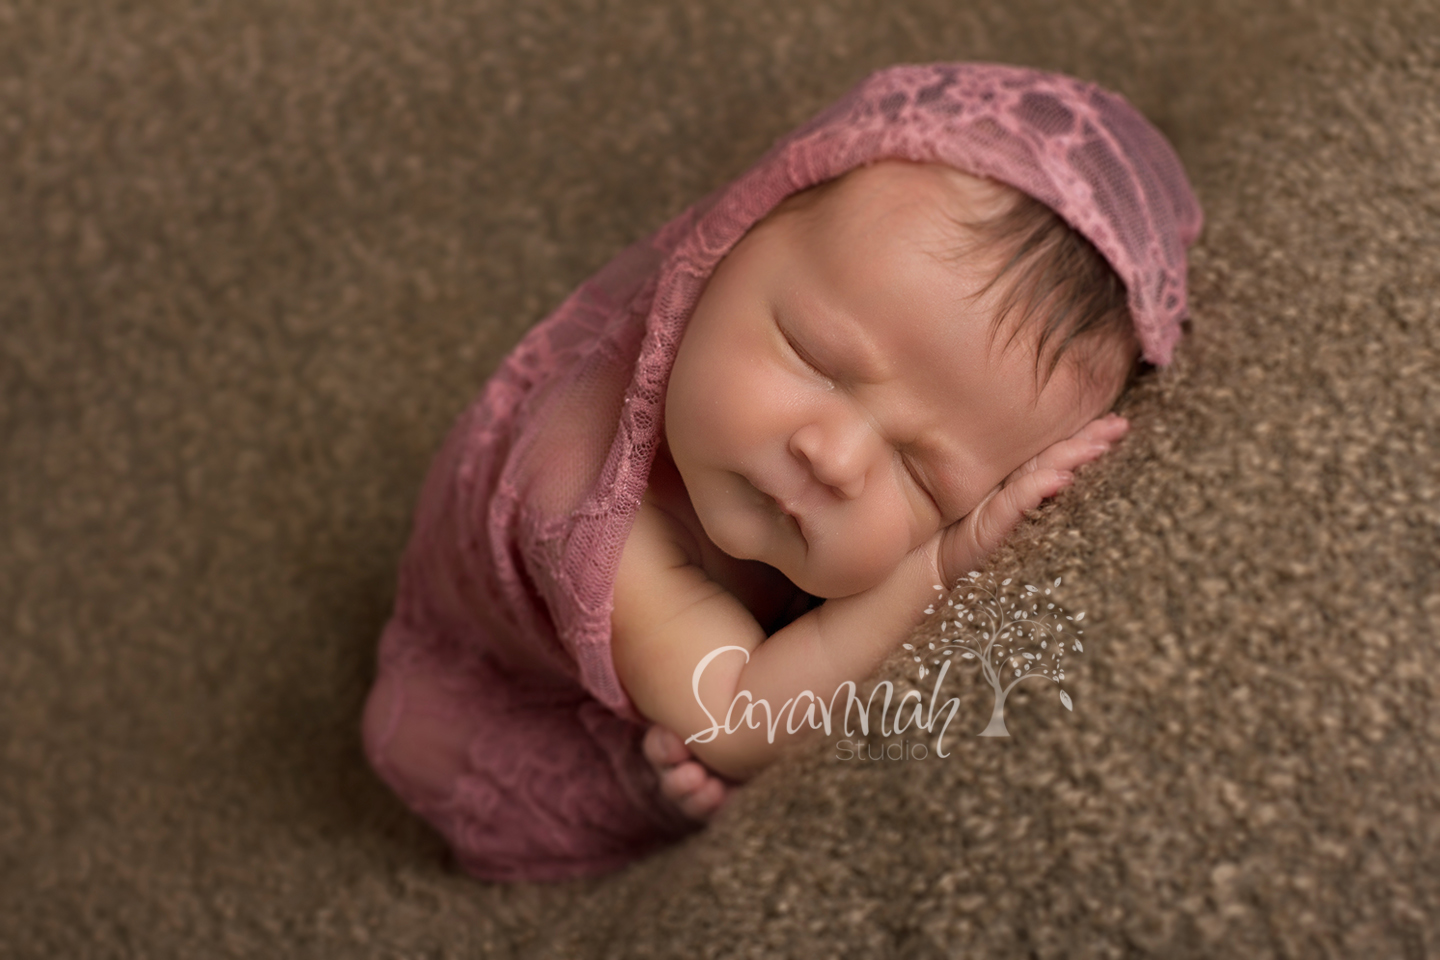 savannahstudio-cairns-family-baby-maternity-newborn-photographer-39